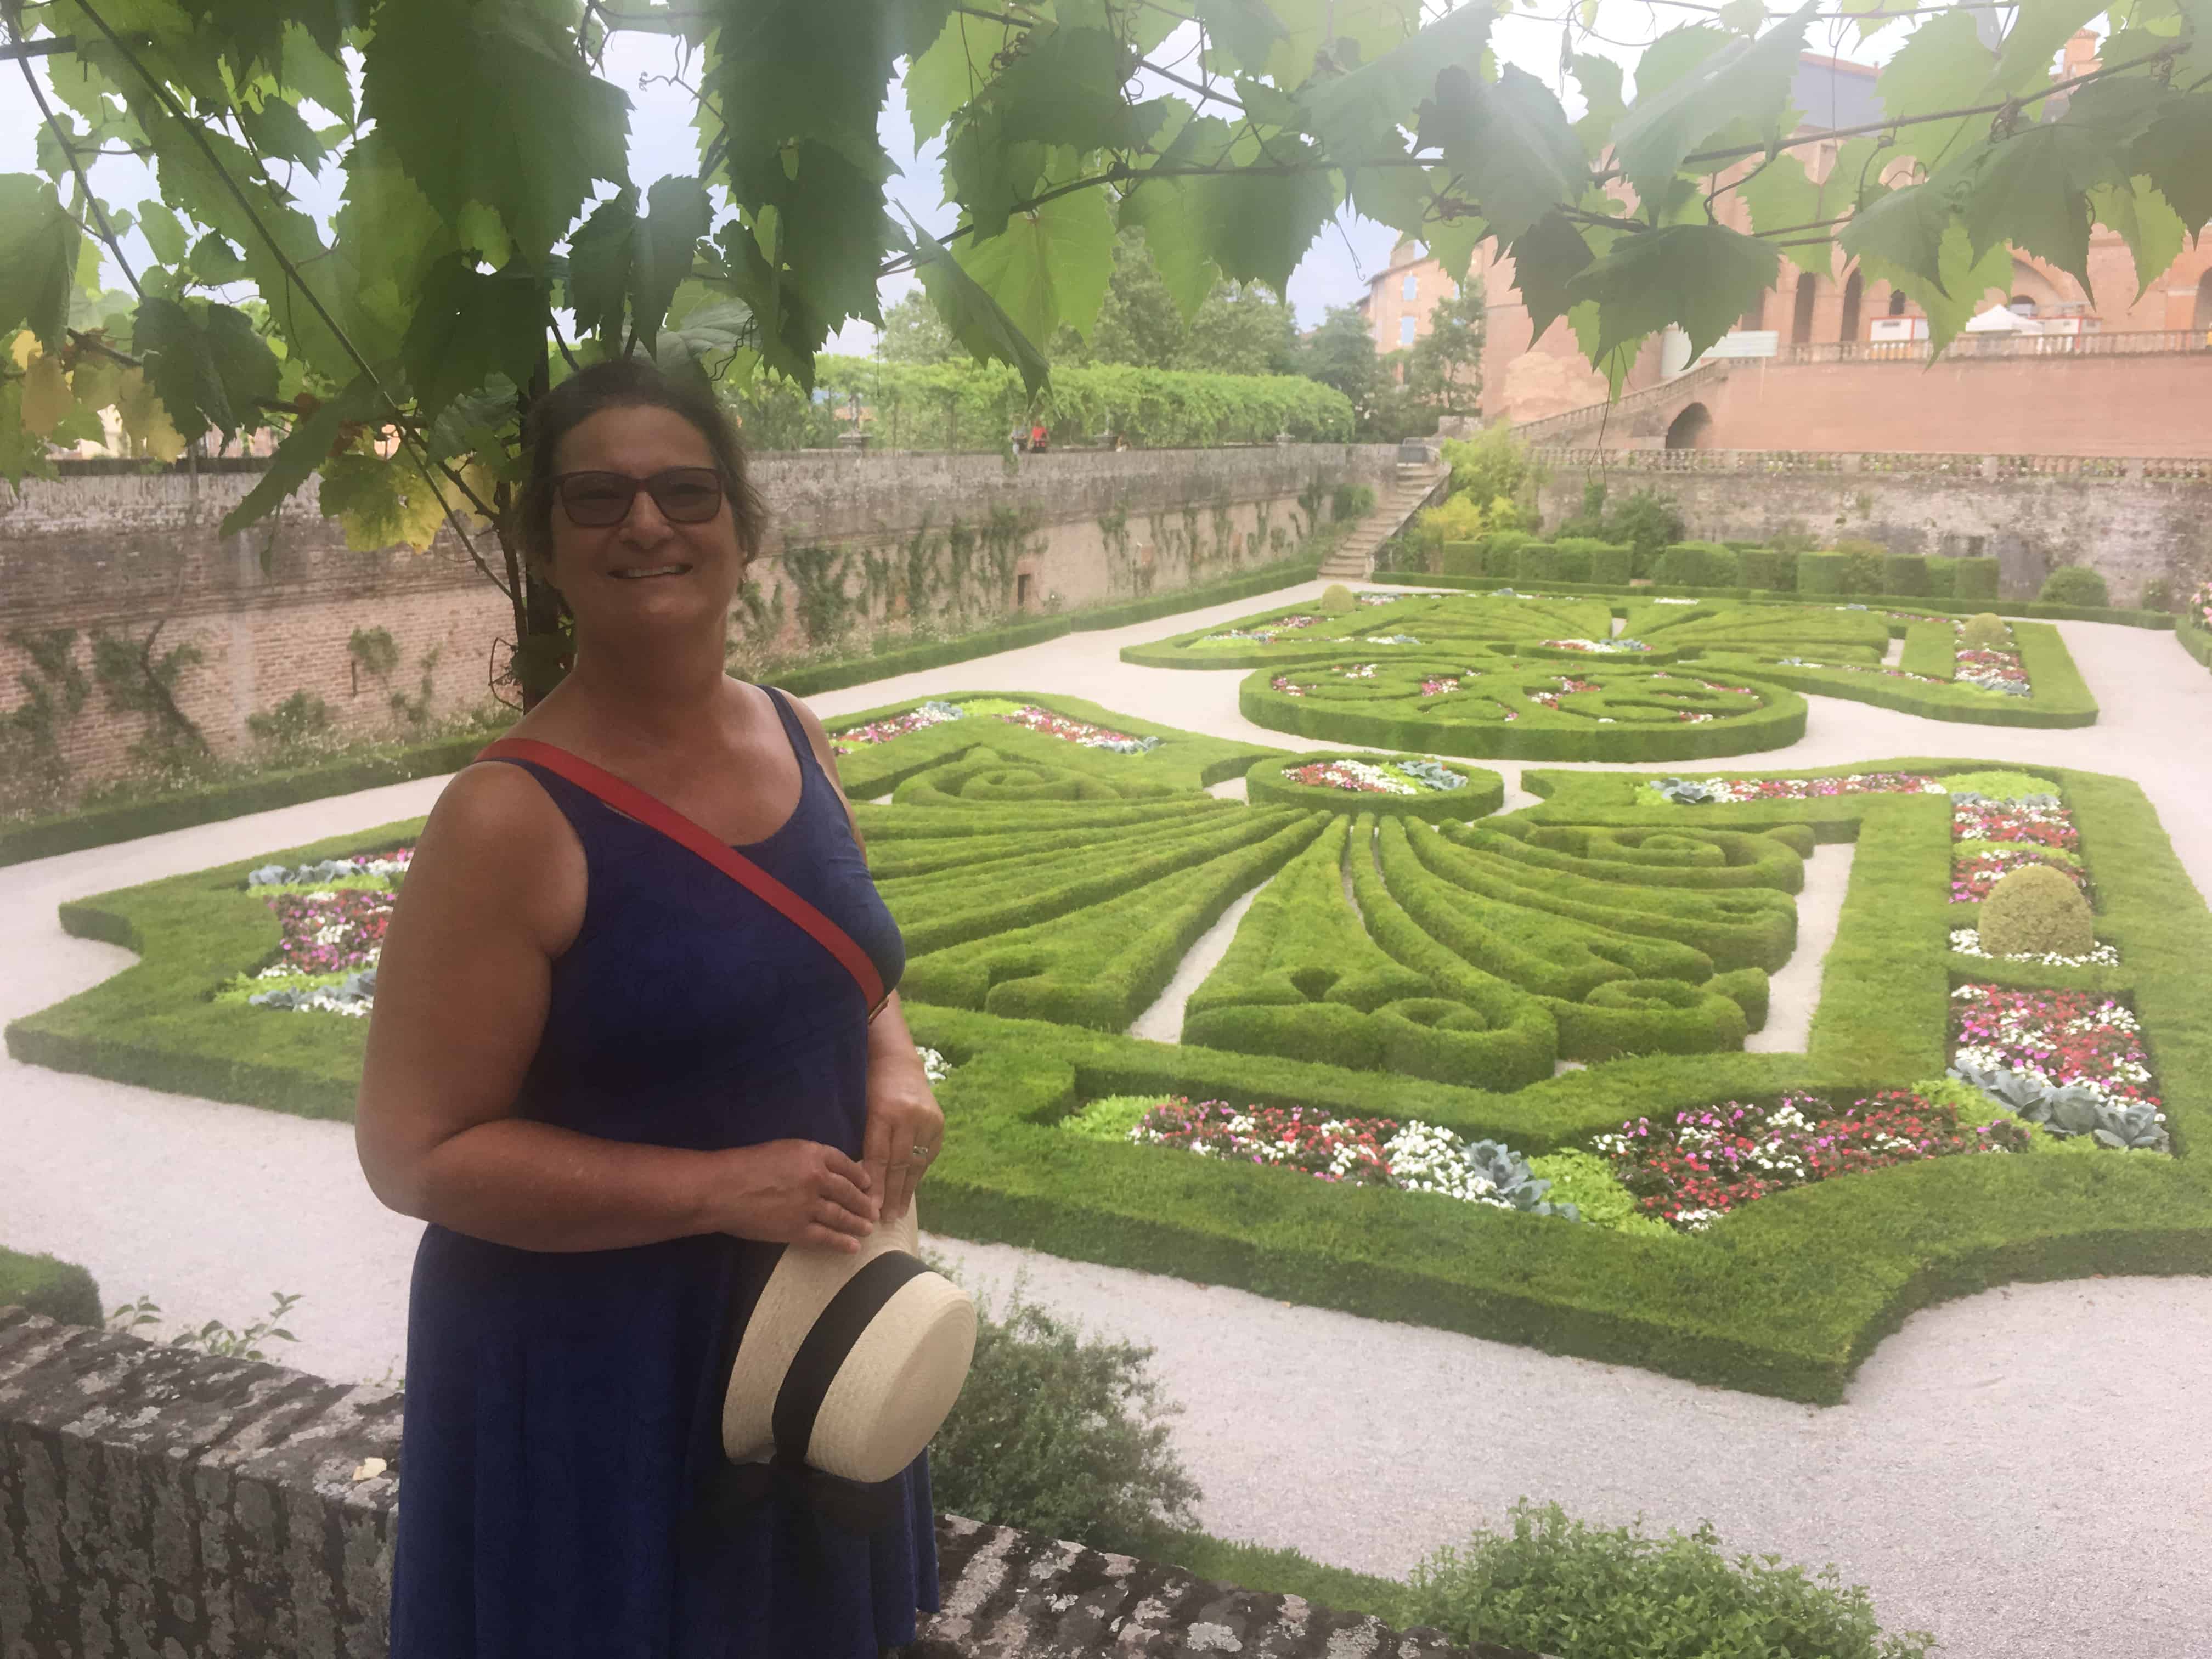 Overlooking the gardens at the Palais de la Berbie that houses the Musée Toulouse-Lautrec in Albi, France